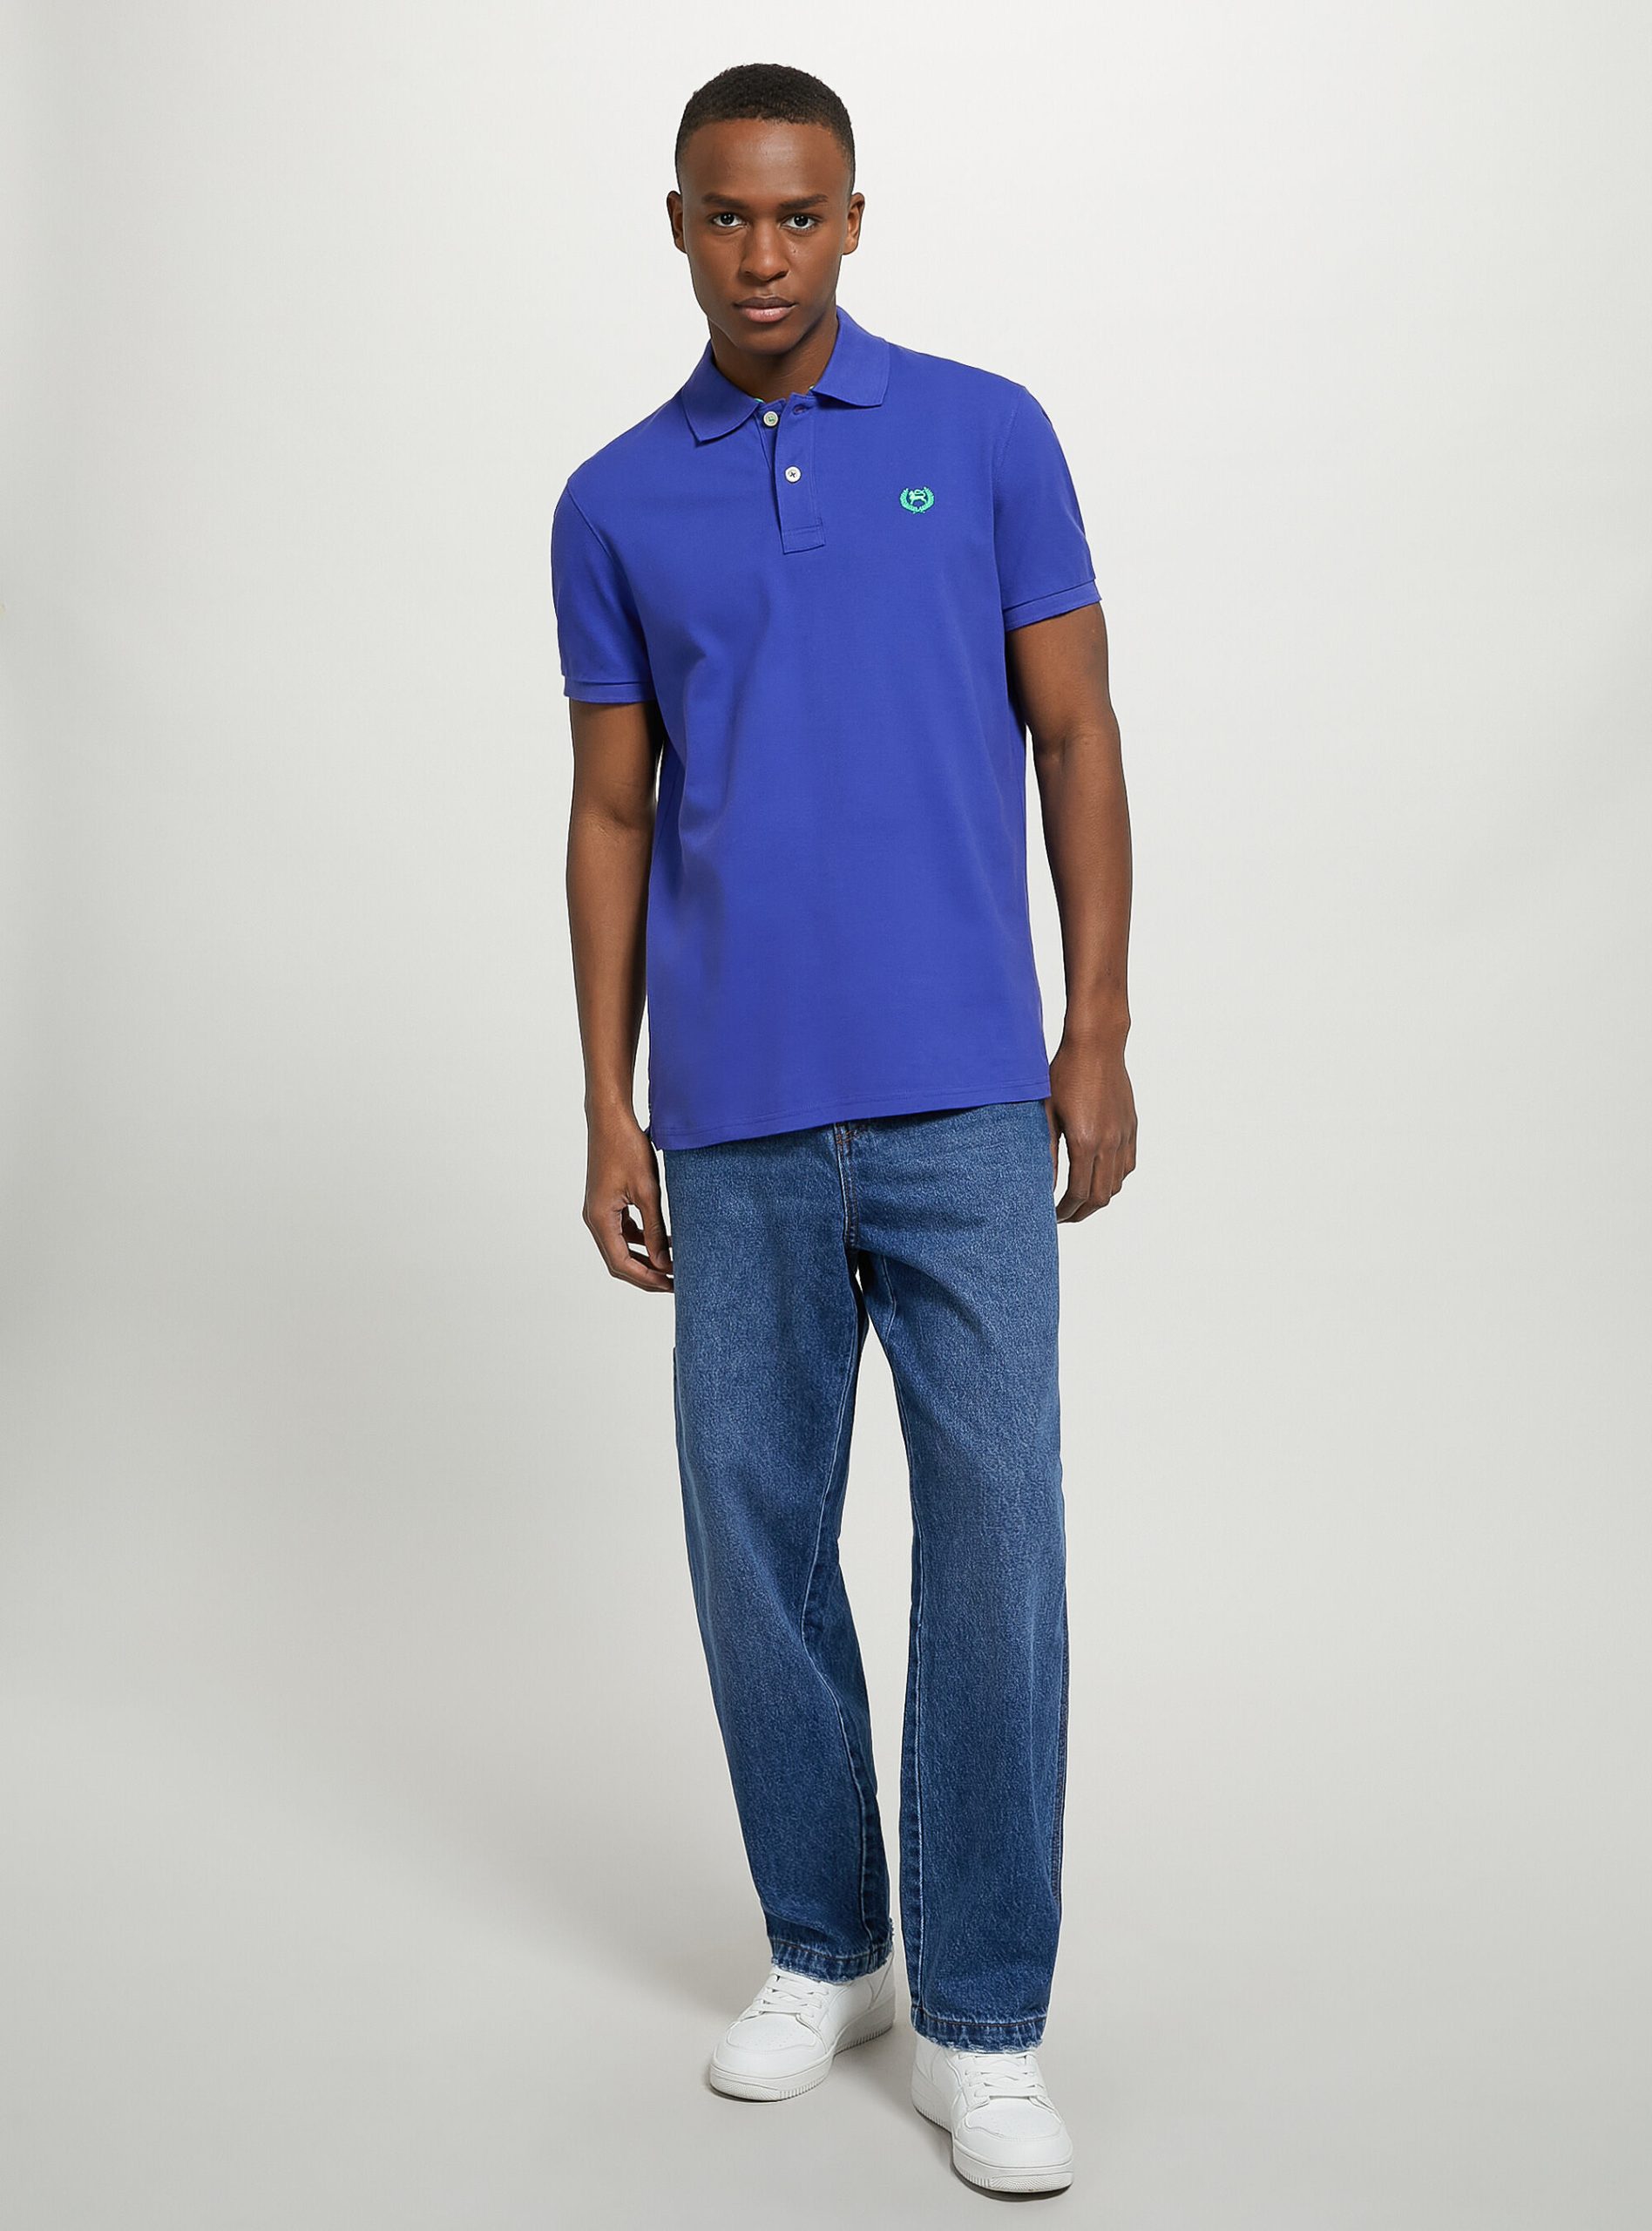 Vi1 Violet Dark Männer Cotton Piqué Polo Shirt With Embroidery Prozentualer Rabatt Alcott Polo – 1